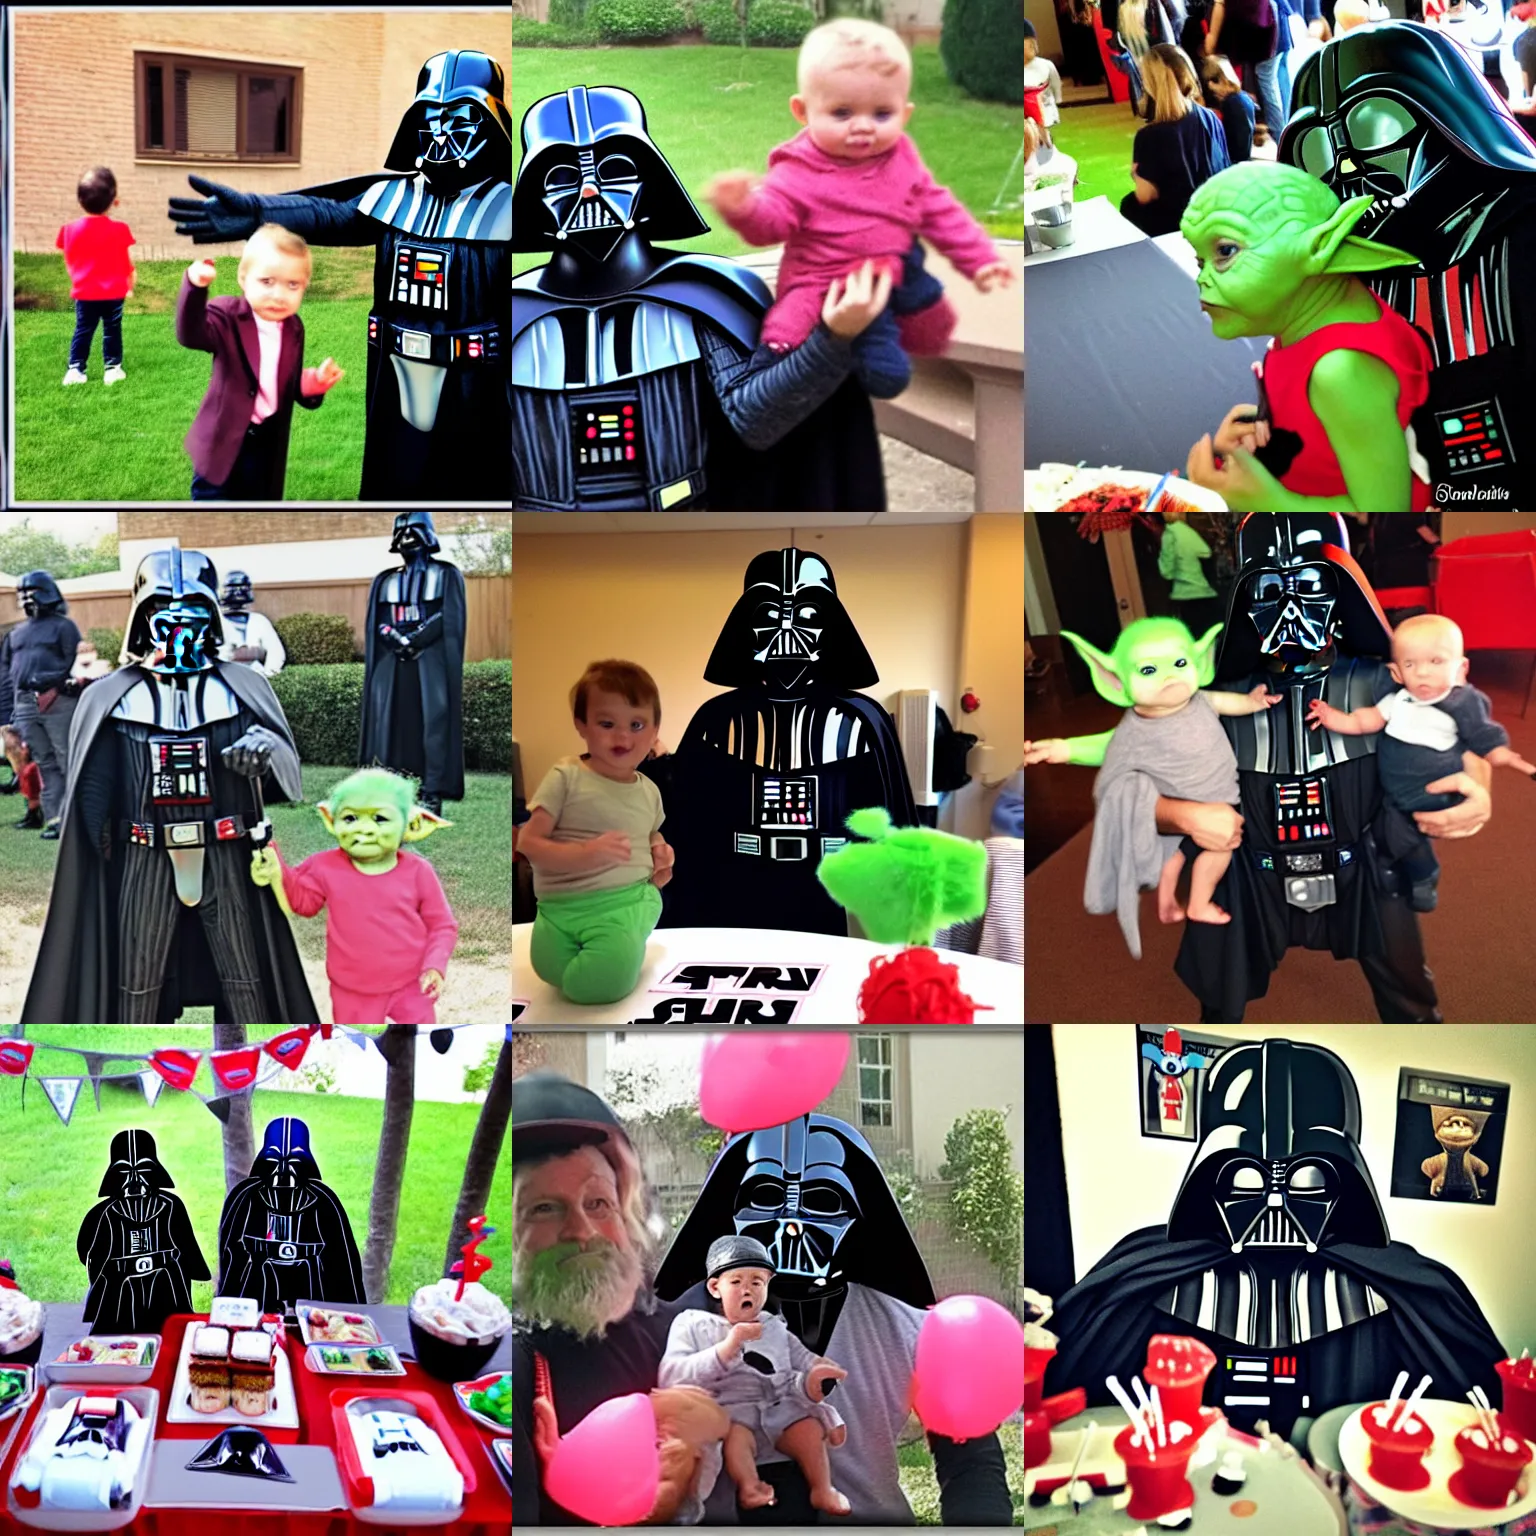 Prompt: Darth Vader at Baby Yoda's Party. Having fun together